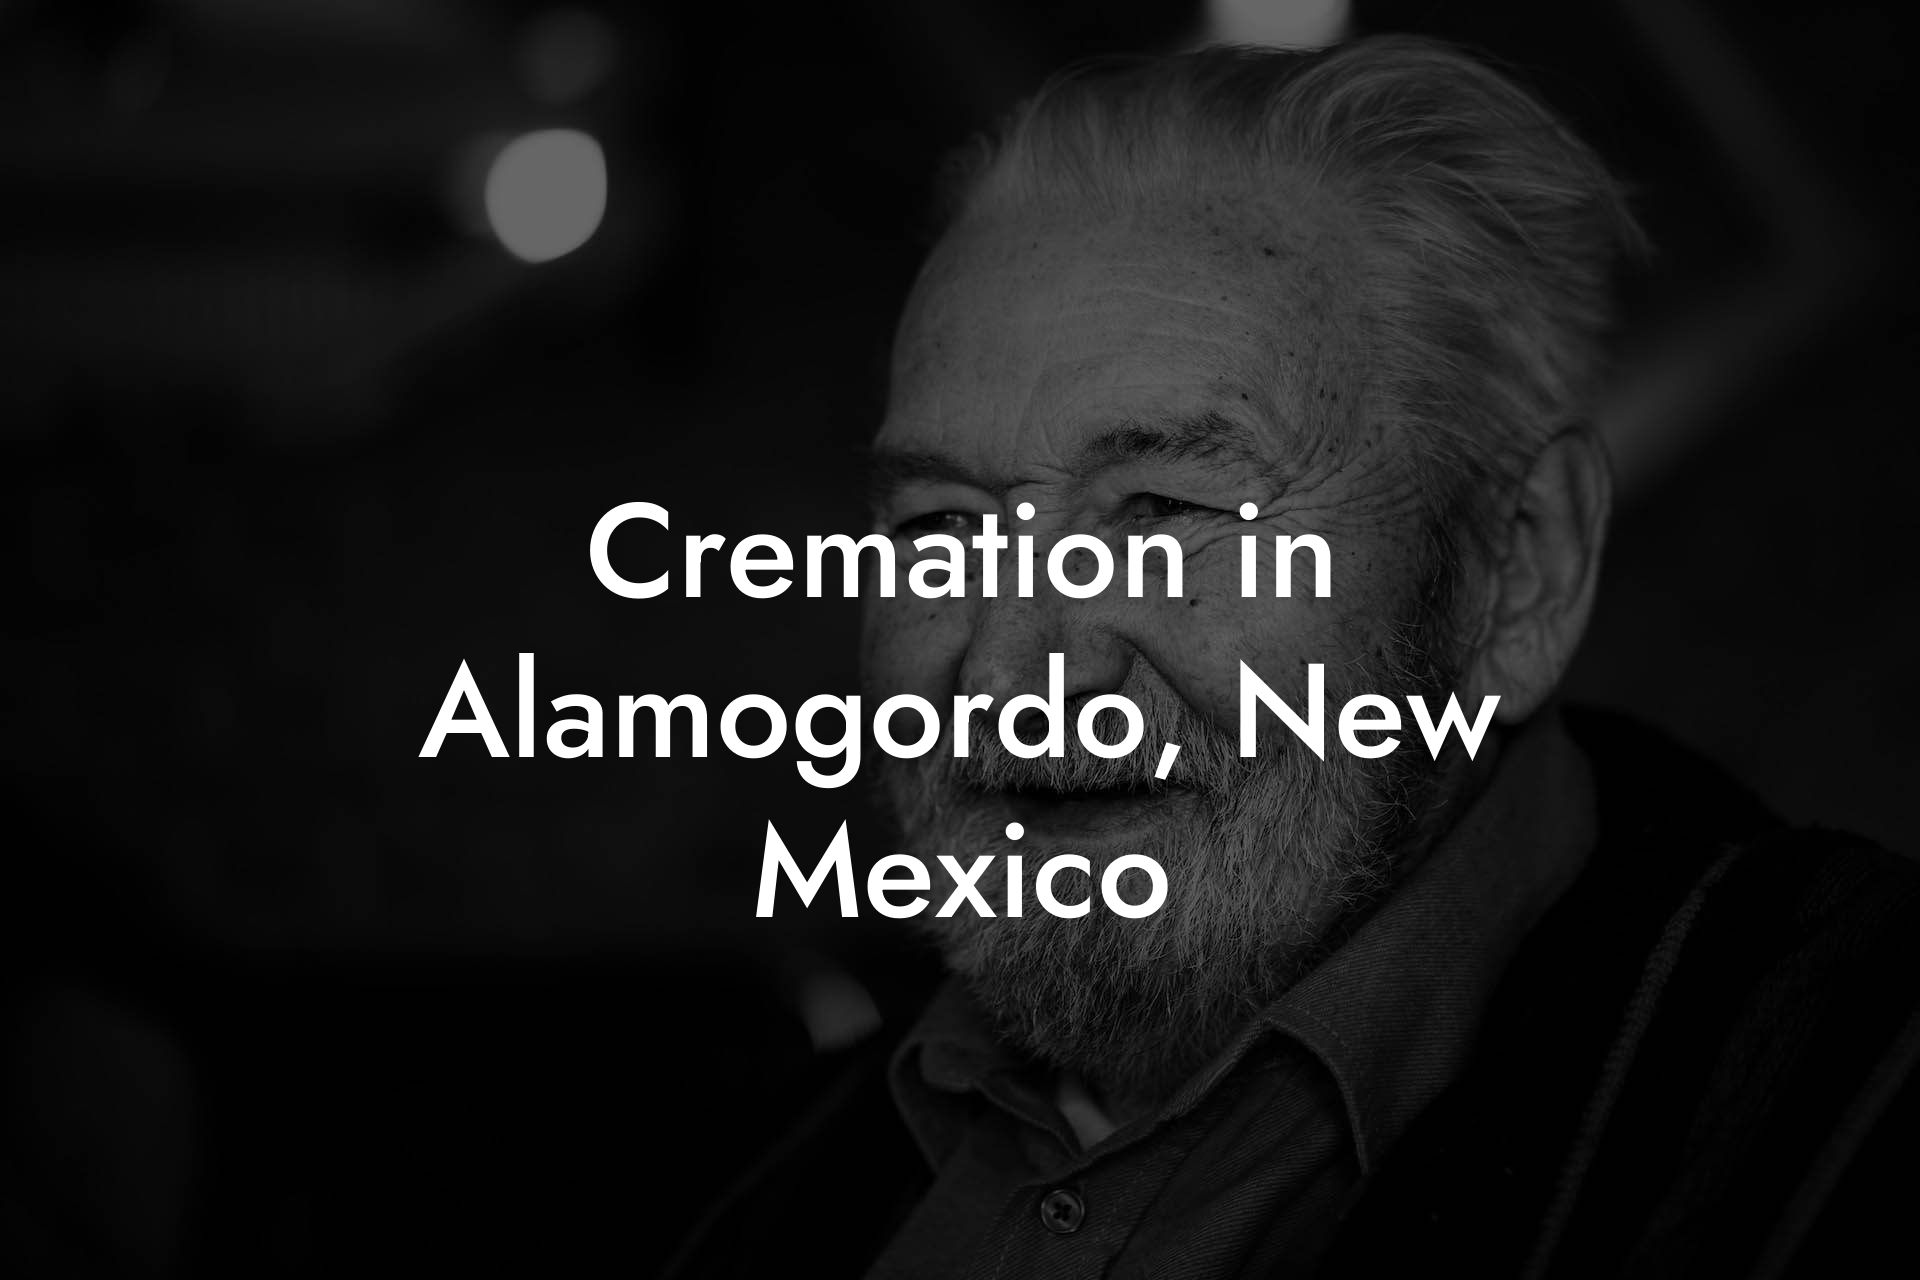 Cremation in Alamogordo, New Mexico